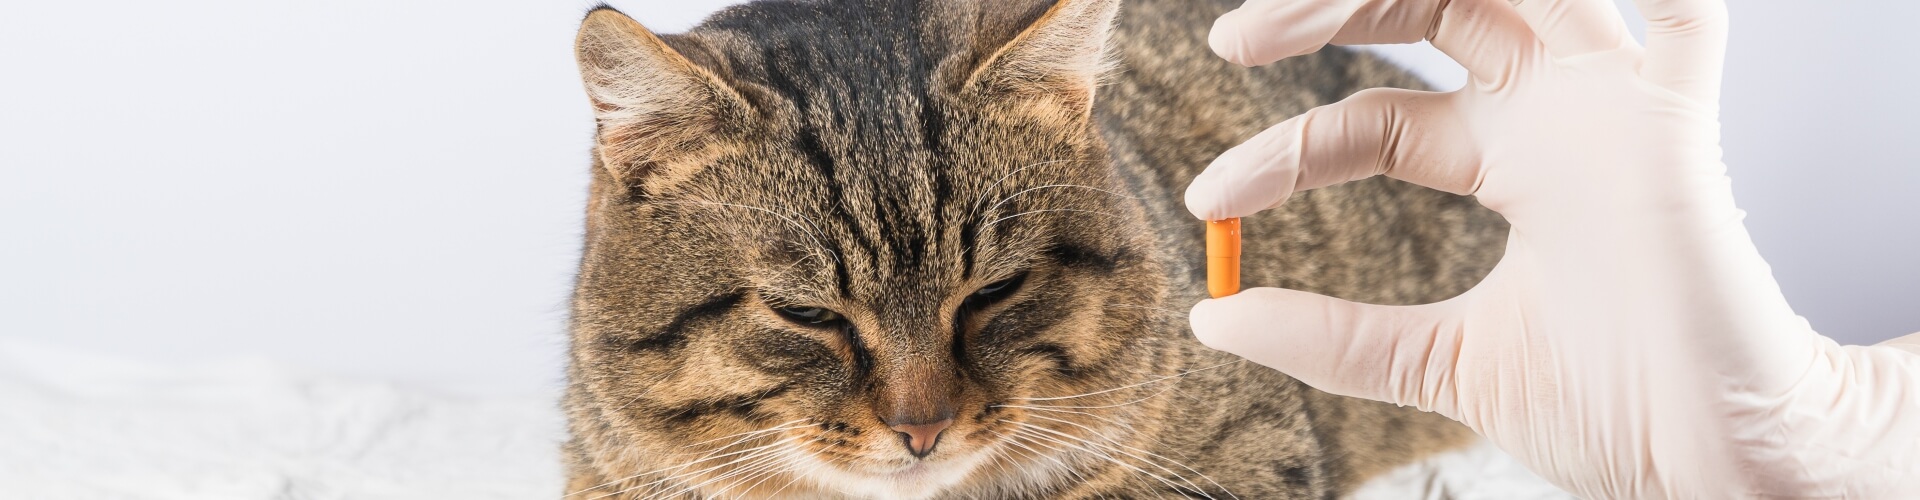 PETPROTECT Magazin: Diabetes bei Katzen - Ursachen, Risiken, Symptome und Behandlung